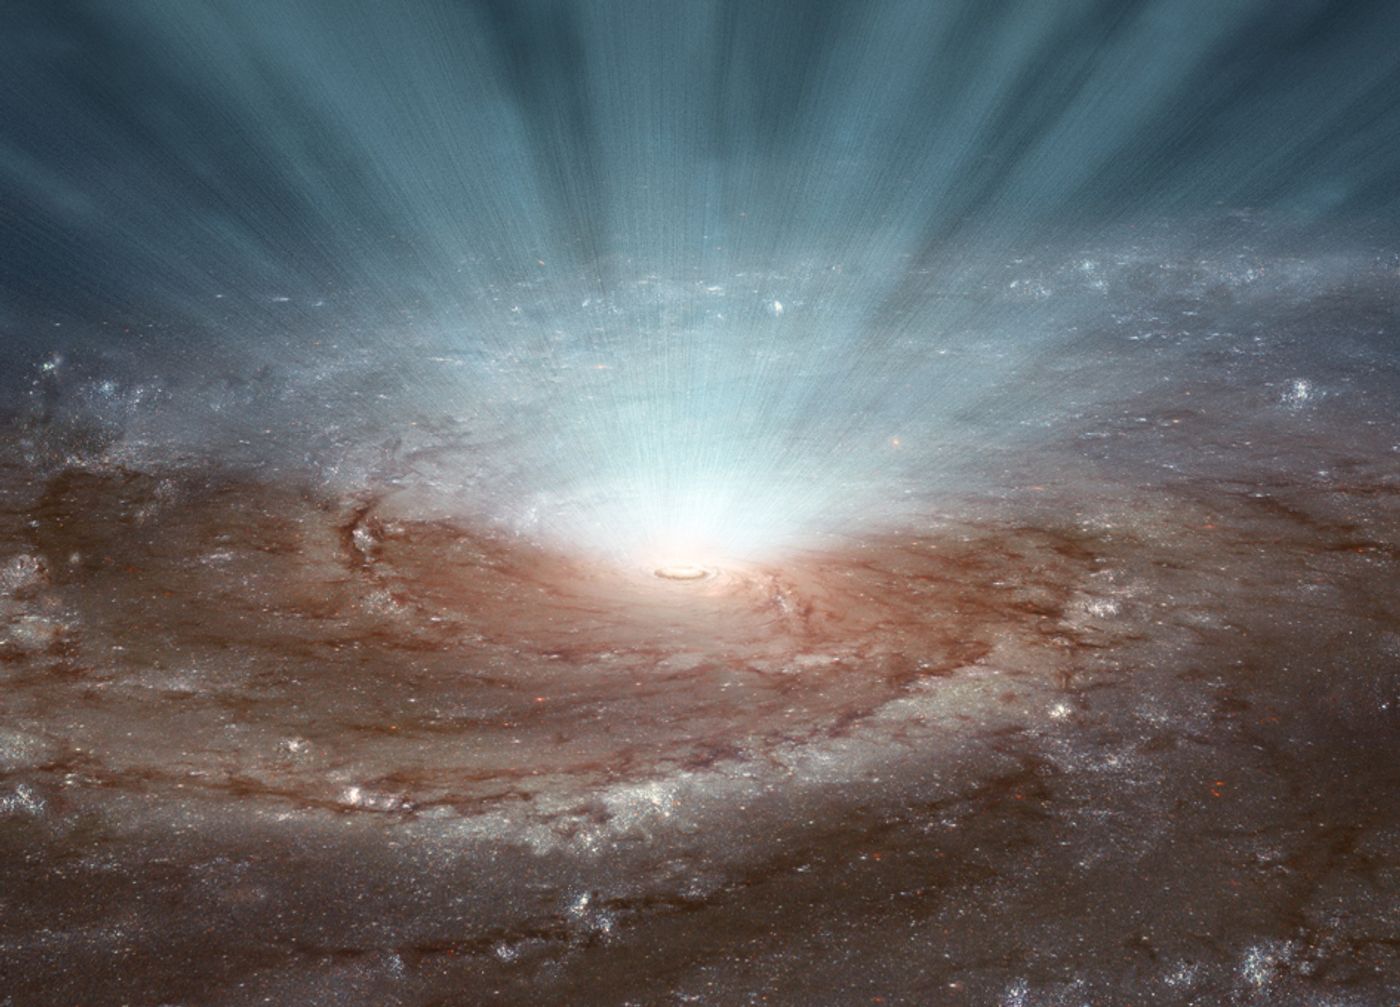 A bright black hole in space generates fierce space wind